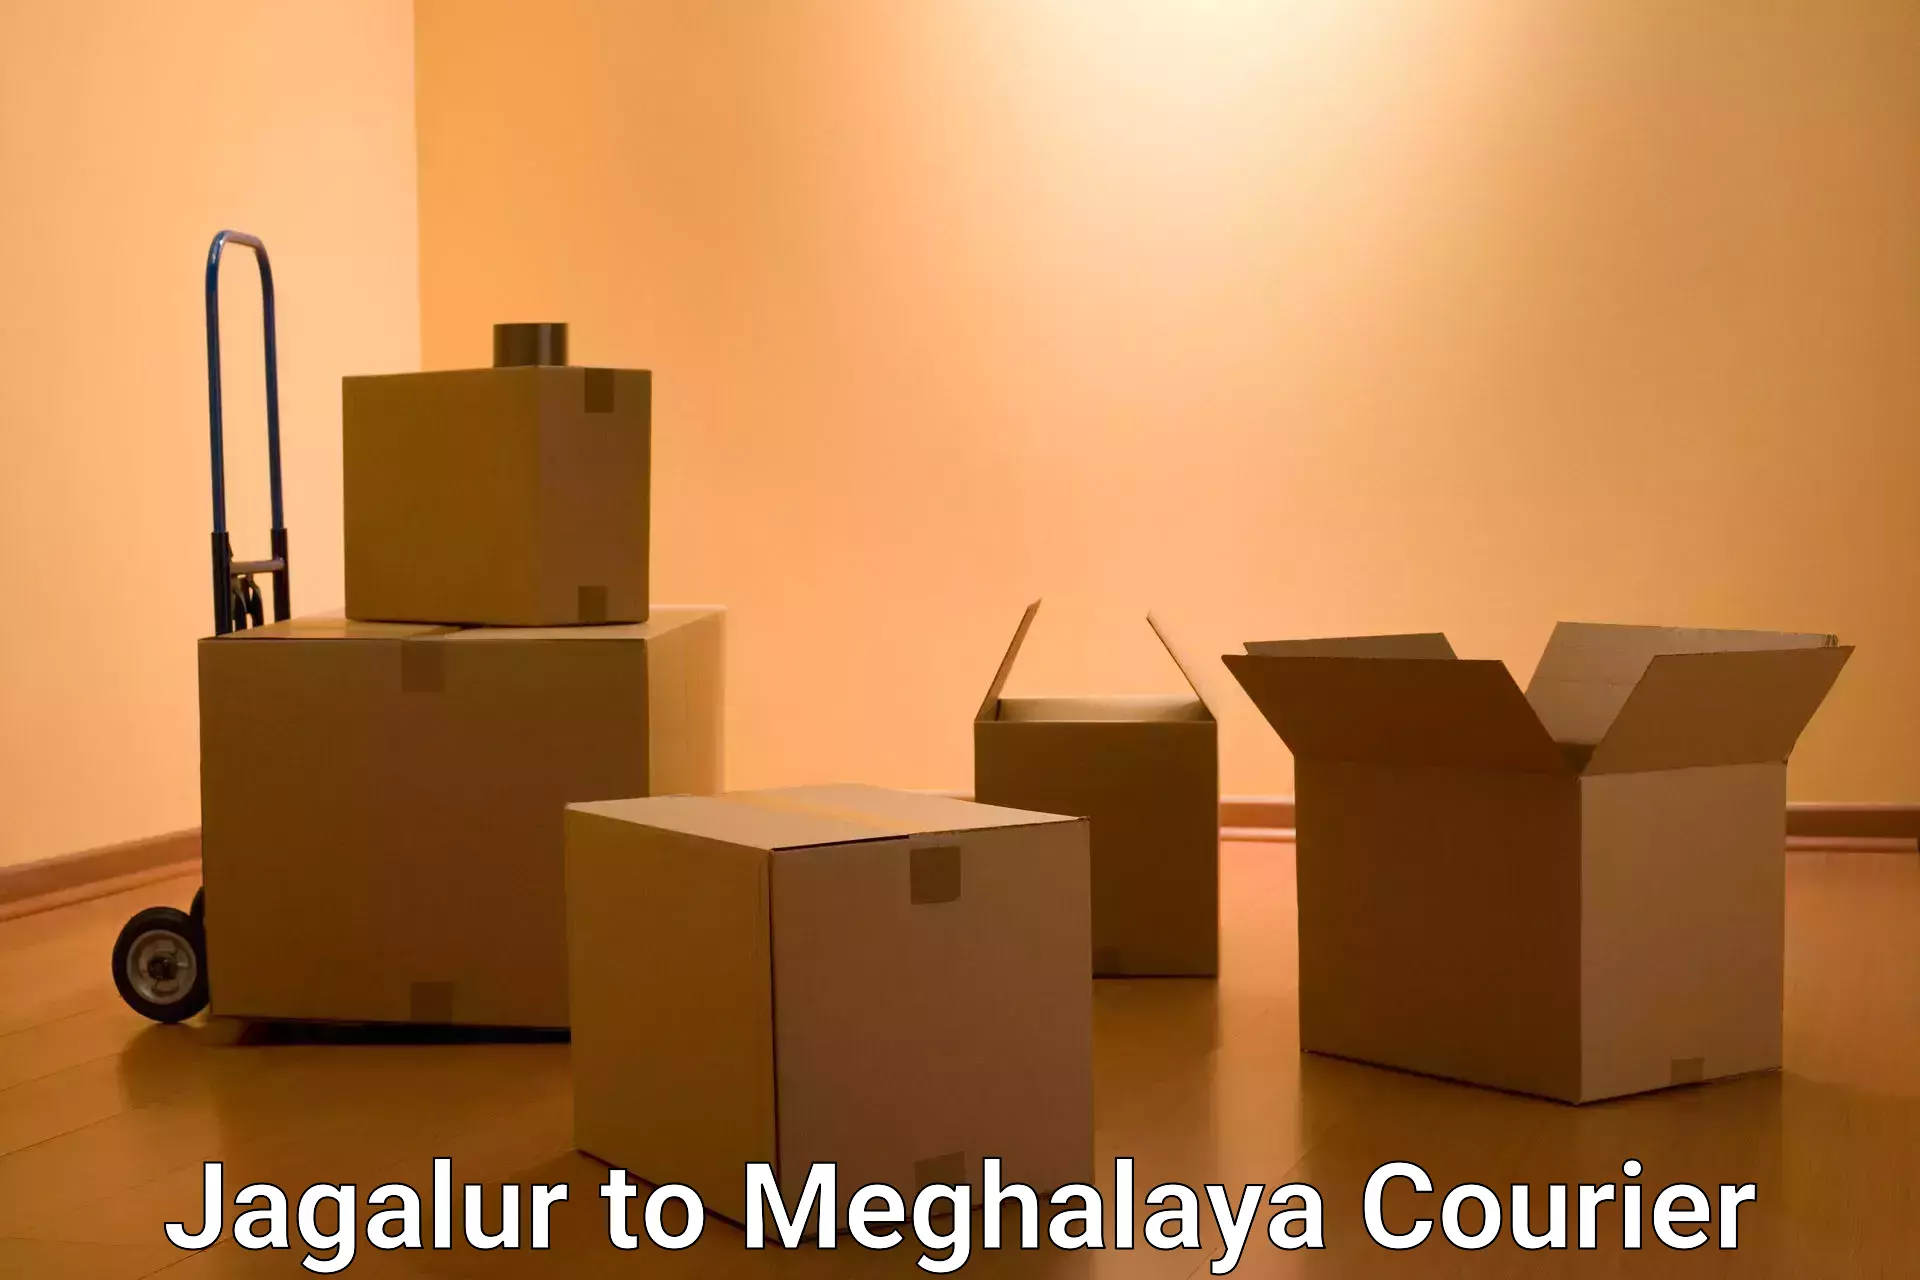 Digital courier platforms Jagalur to Shillong